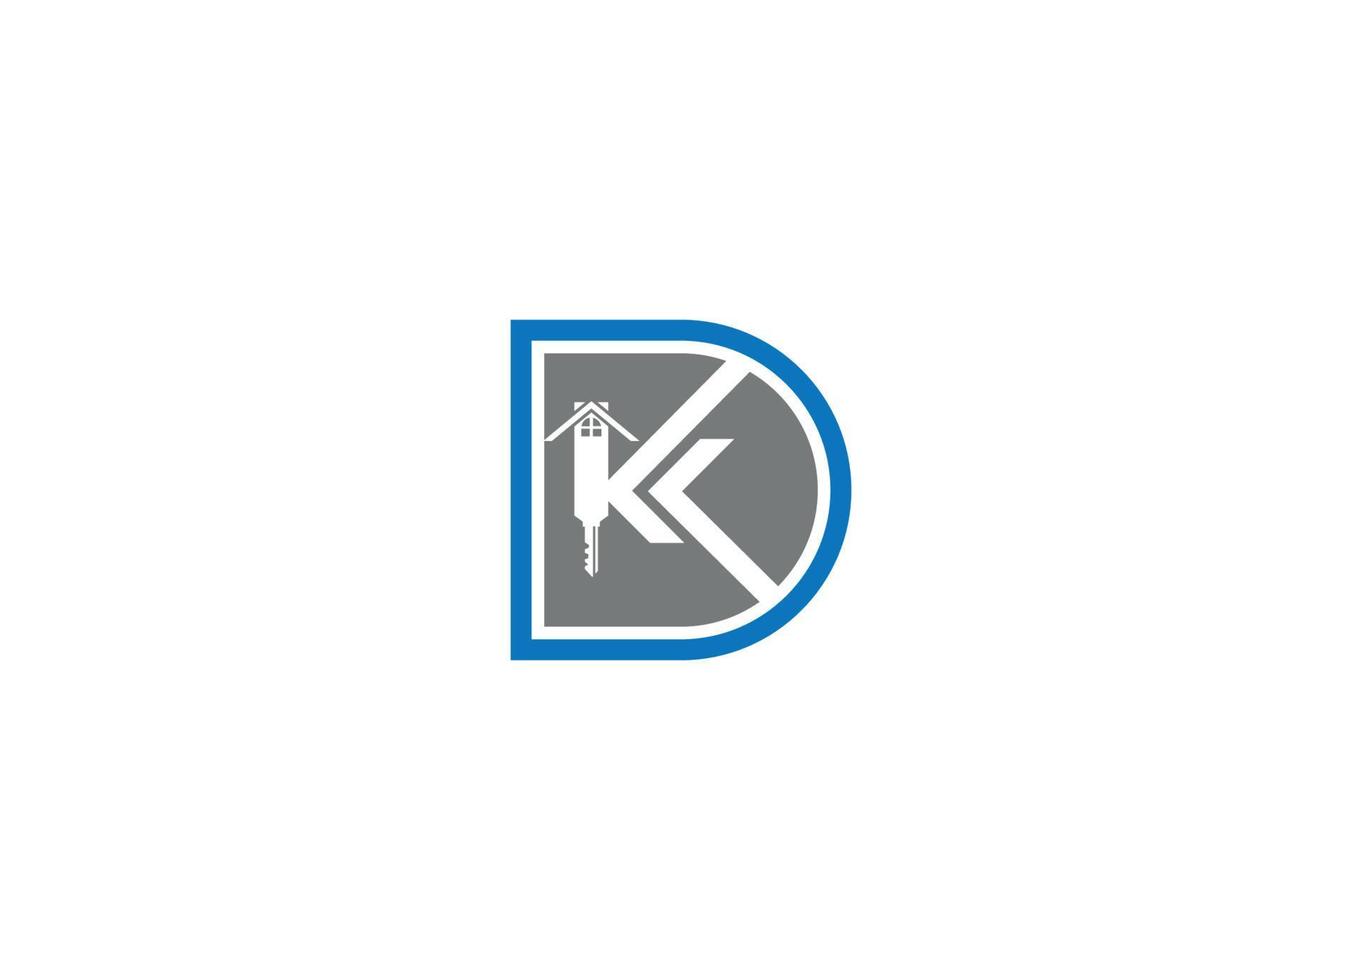 dk beginletter minimalistisch logotype vector